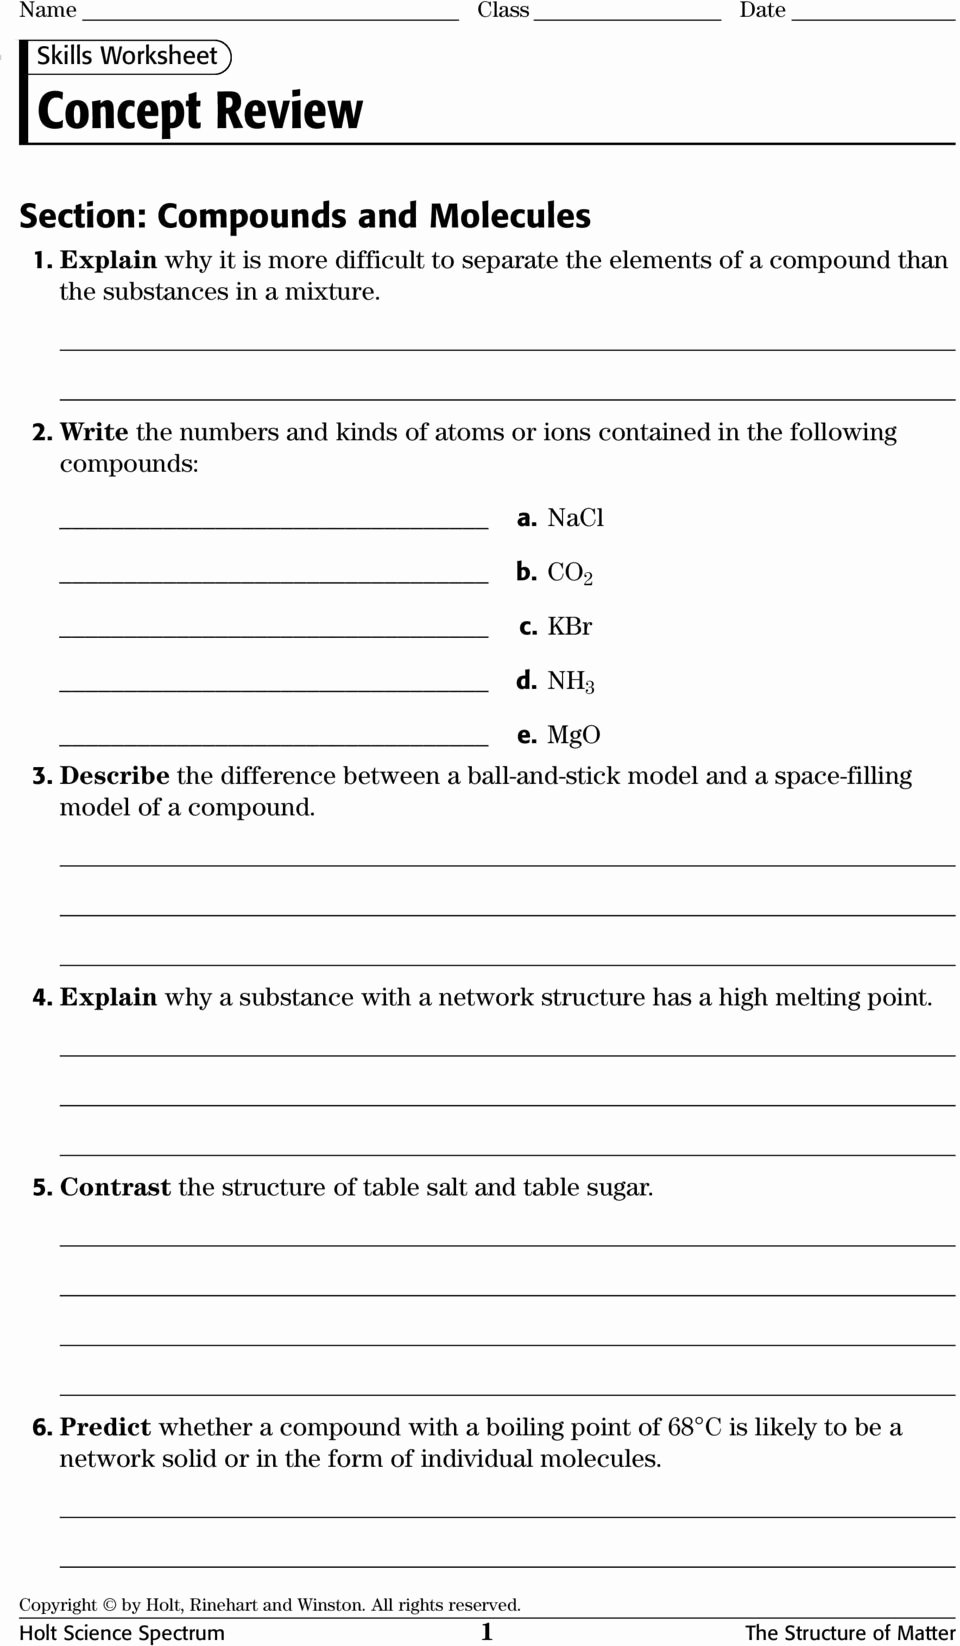 Behavior Of Gases Worksheet Inspirational Skills Worksheet Concept Review Section the Development